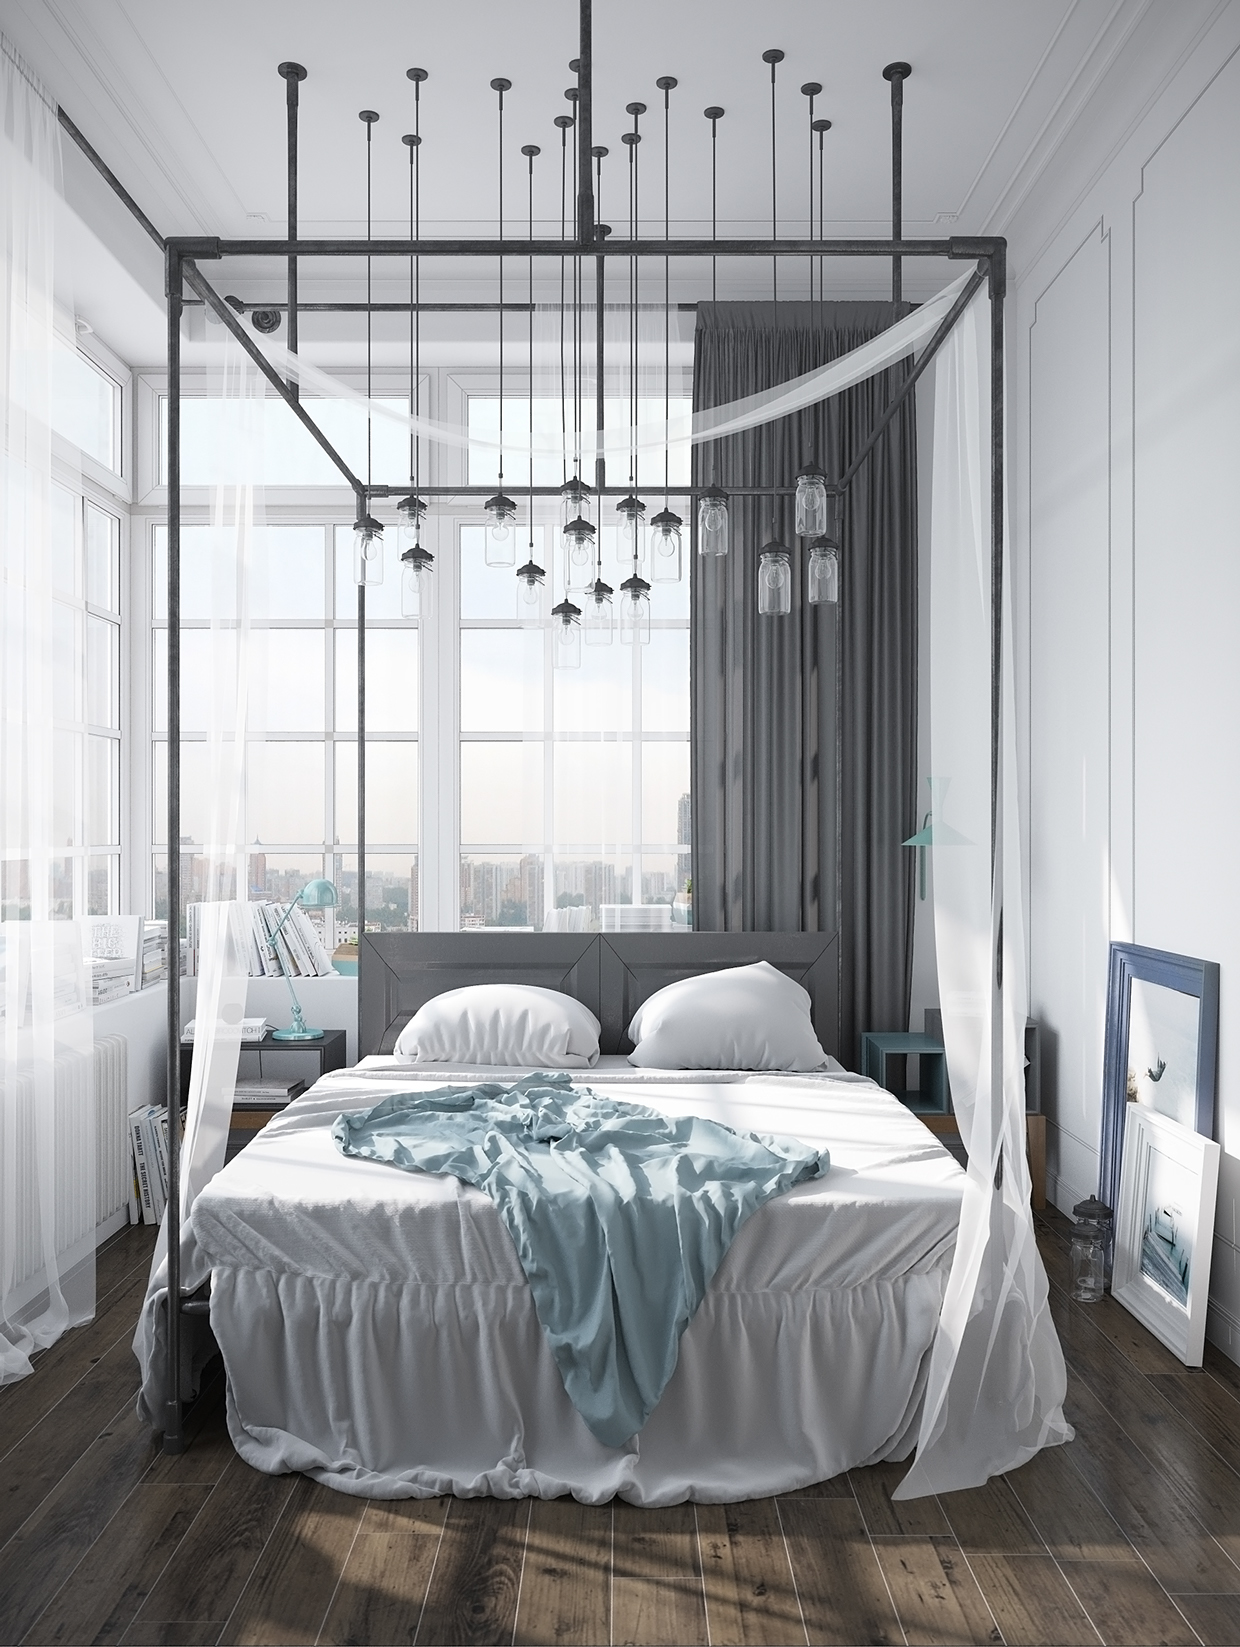 Scandinavian bedroom design "width =" 1240 "height =" 1647 "srcset =" https://mileray.com/wp-content/uploads/2020/05/Scandinavian-Bedroom-Design-For-Woman-With-A-White-Color-Scheme.png 1240w, https://mileray.com/ wp -content / uploads / 2016/04 / Denis-Krasikov-226x300.png 226w, https://mileray.com/wp-content/uploads/2016/04/Denis-Krasikov-768x1020.png 768w, https: // myfashionos .com / wp-content / uploads / 2016/04 / Denis-Krasikov-771x1024.png 771w, https://mileray.com/wp-content/uploads/2016/04/Denis-Krasikov-696x924.png 696w, https : //mileray.com/wp-content/uploads/2016/04/Denis-Krasikov-1068x1419.png 1068w, https://mileray.com/wp-content/uploads/2016/04/Denis-Krasikov-316x420. png 316w "sizes =" (maximum width: 1240px) 100vw, 1240px